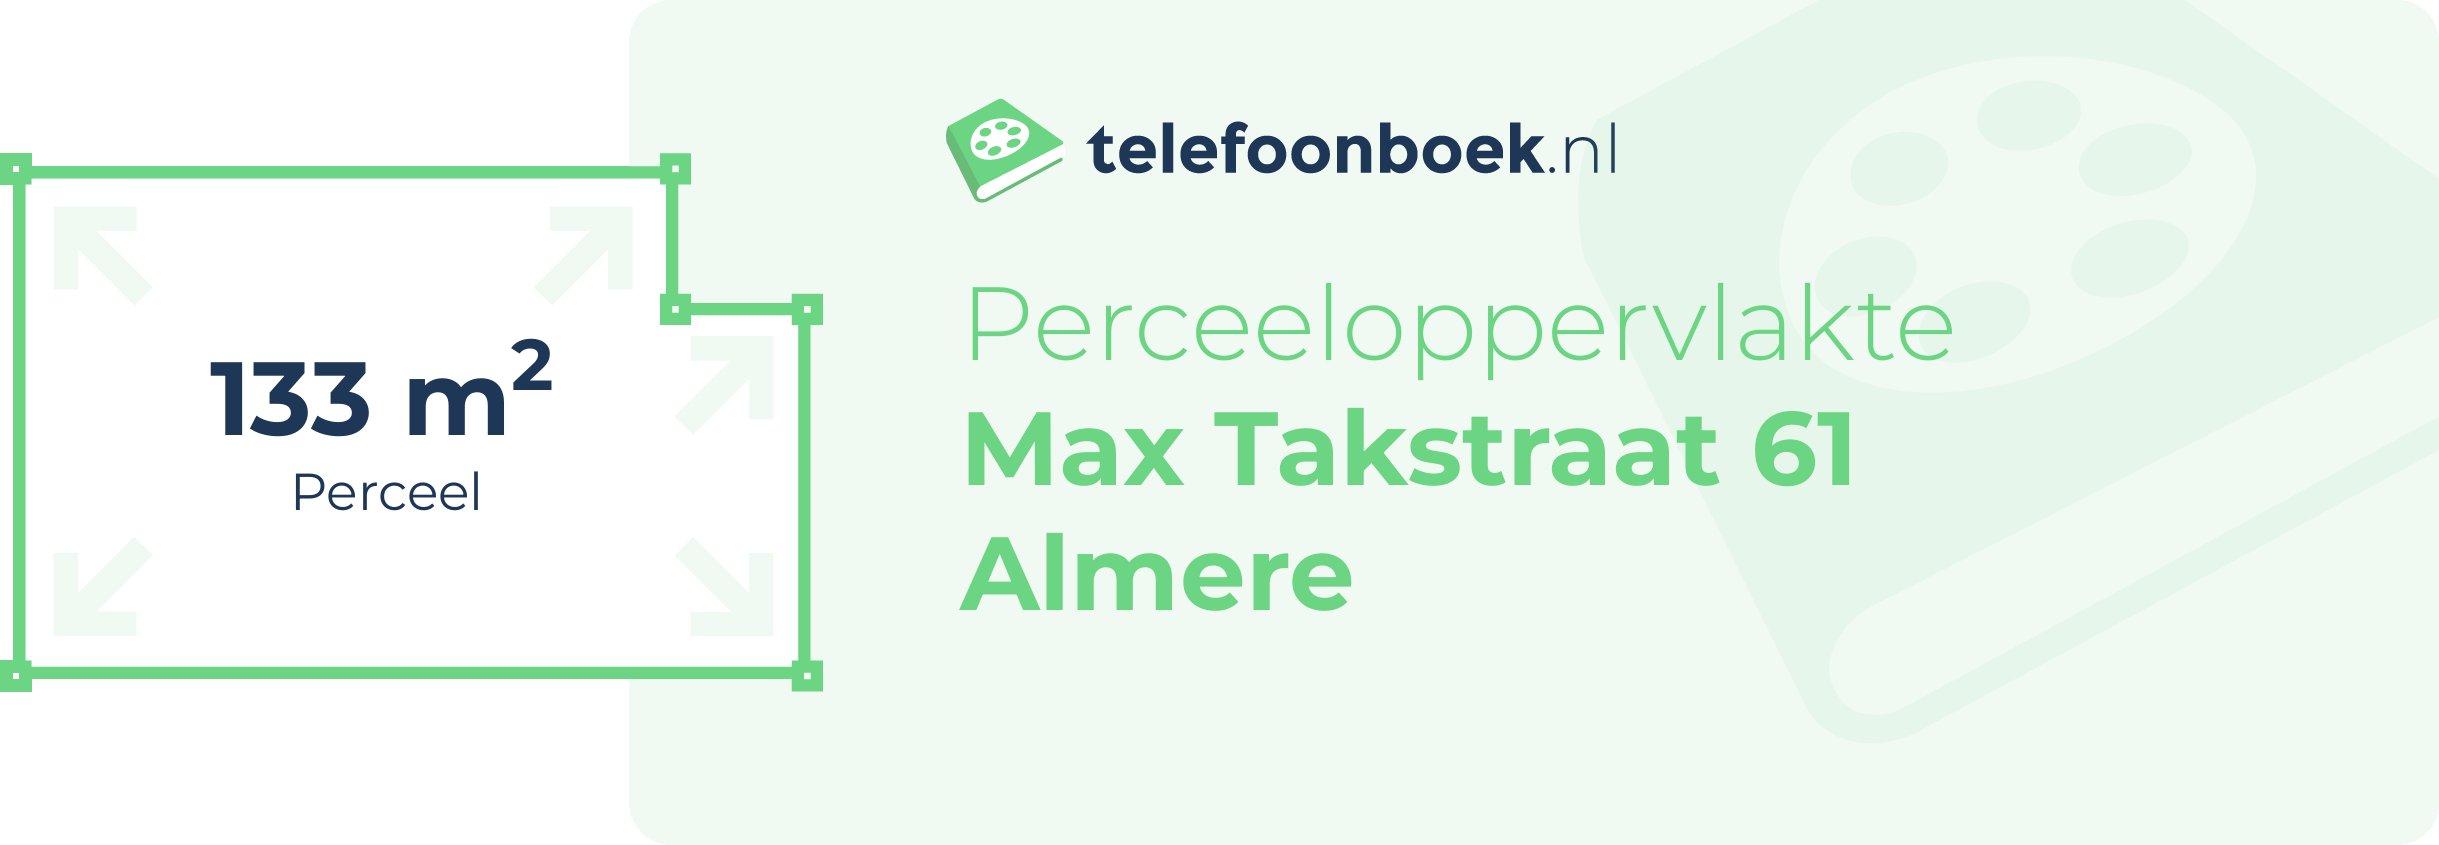 Perceeloppervlakte Max Takstraat 61 Almere